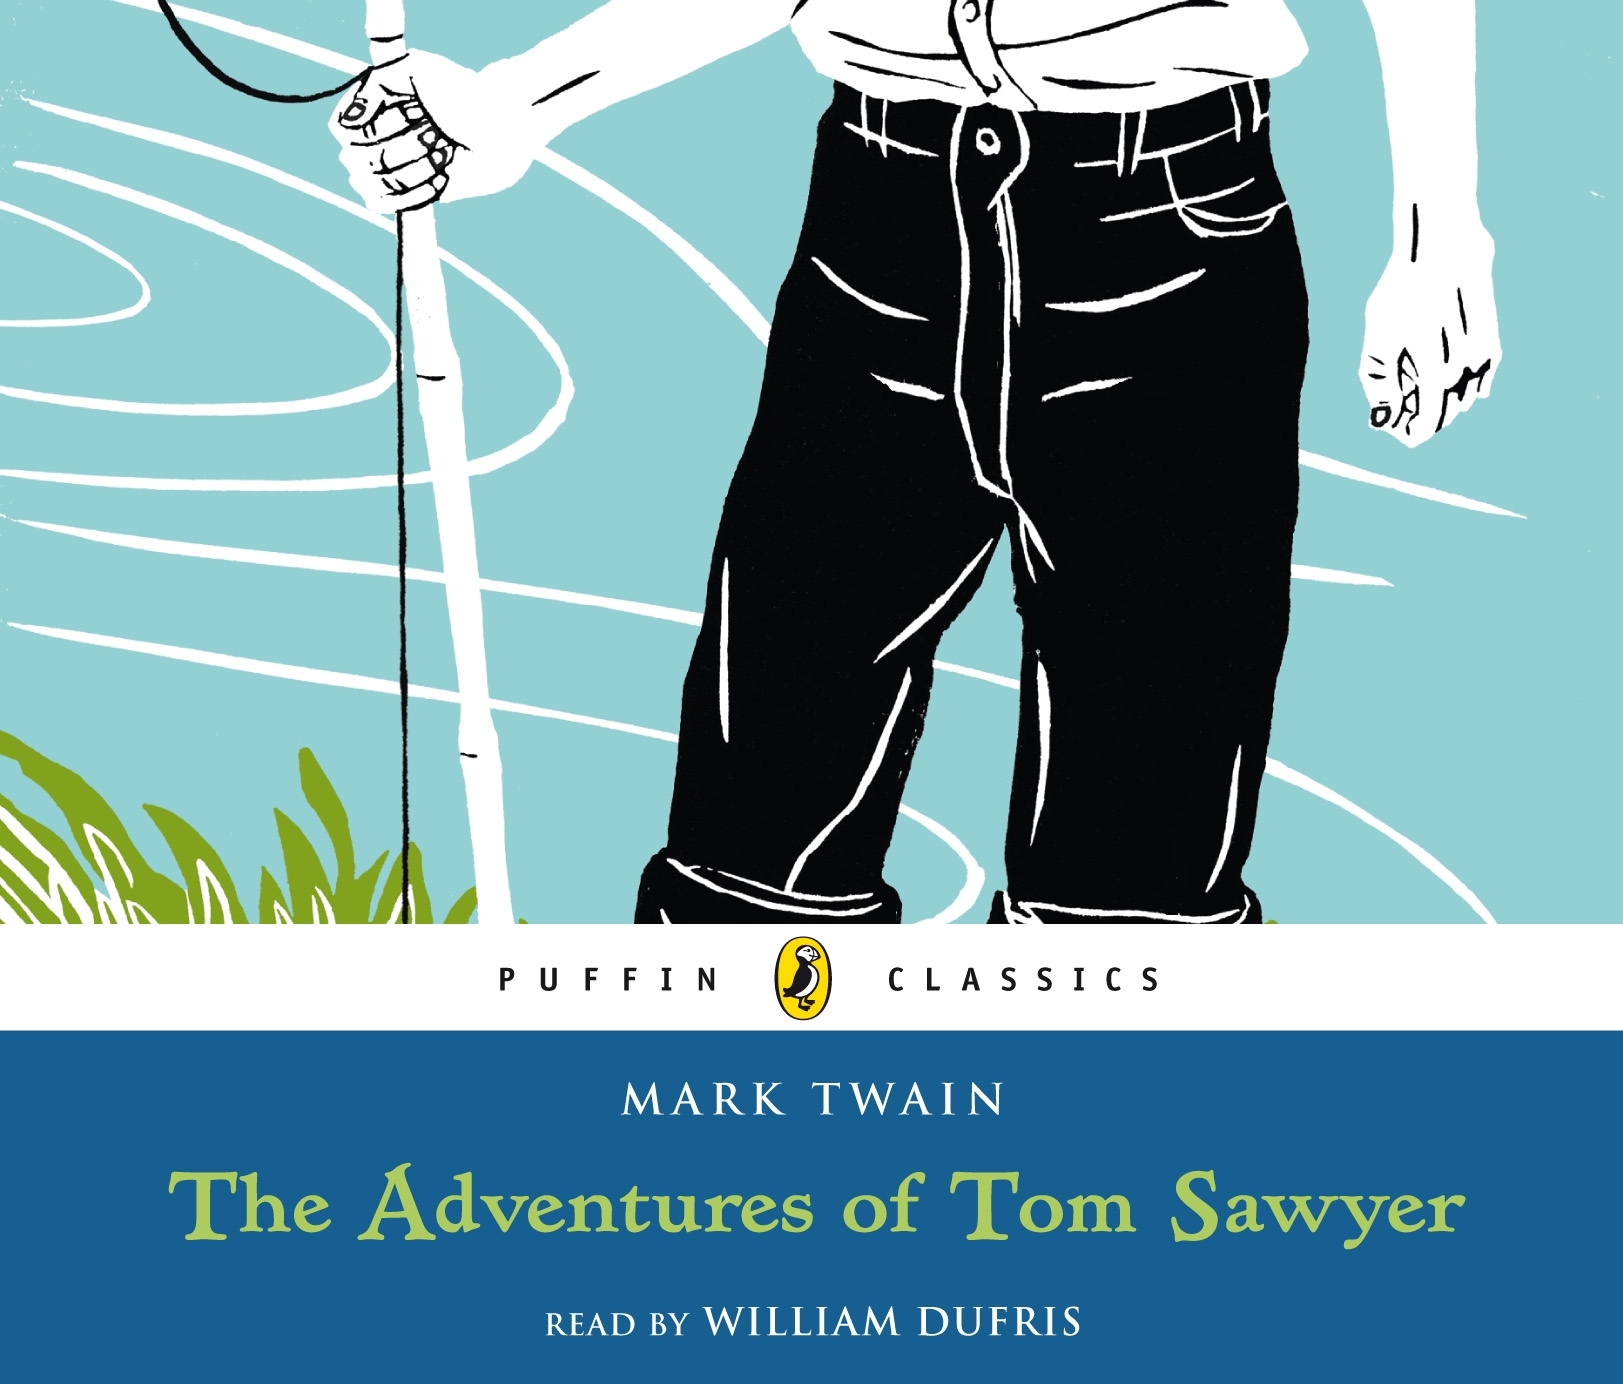 The Adventures of Tom Sawyer. Mark Twain the Adventures of Tom. Mark Twain Tom Sawyer. Tom Sawyer book Cover. Аудиокнига приключение марка твена